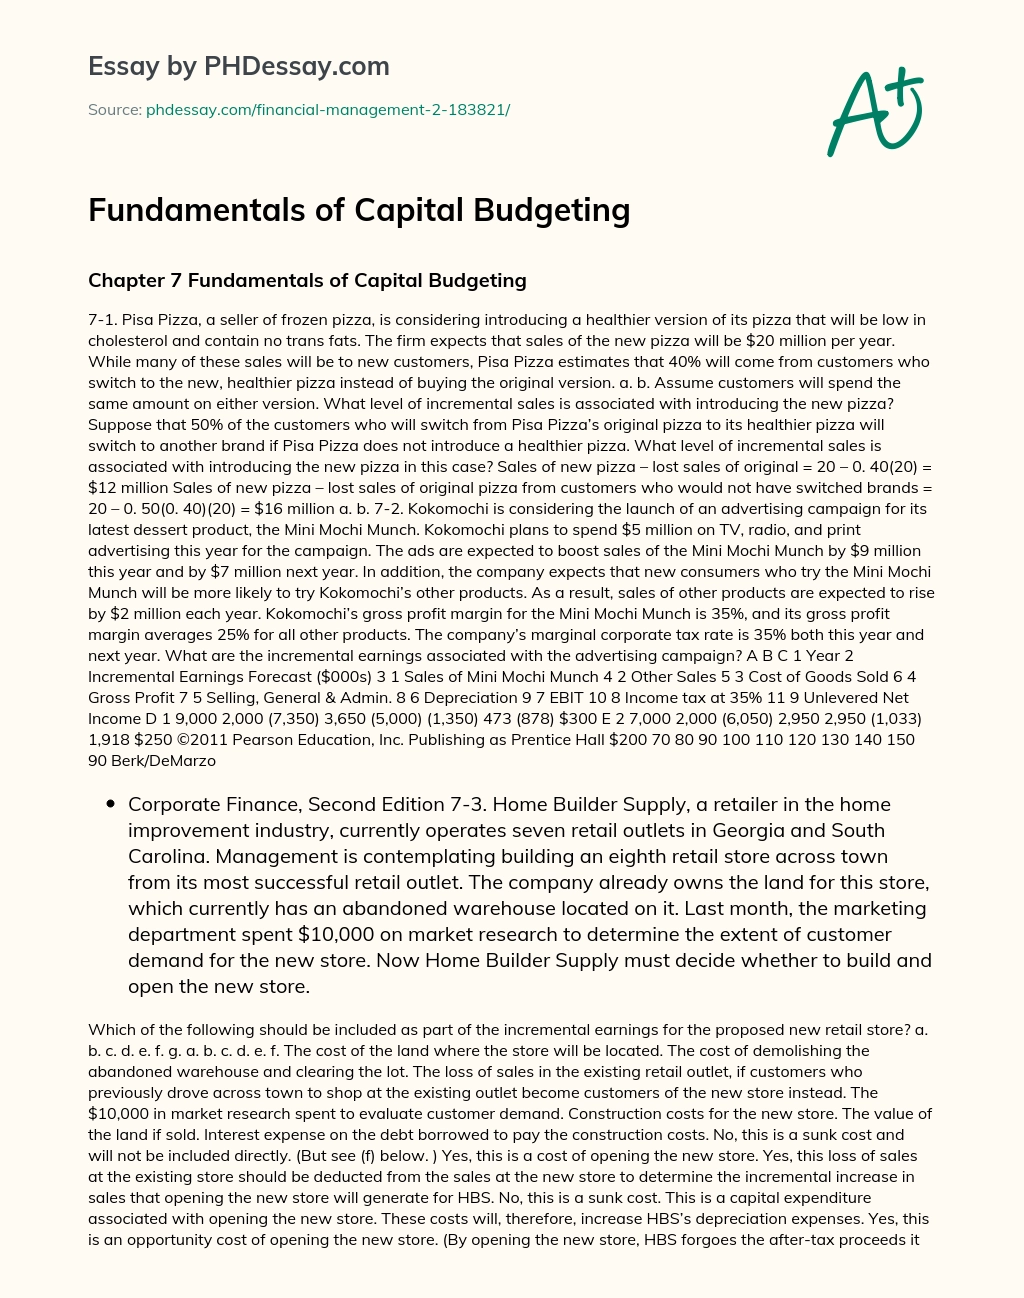 Fundamentals of Capital Budgeting essay